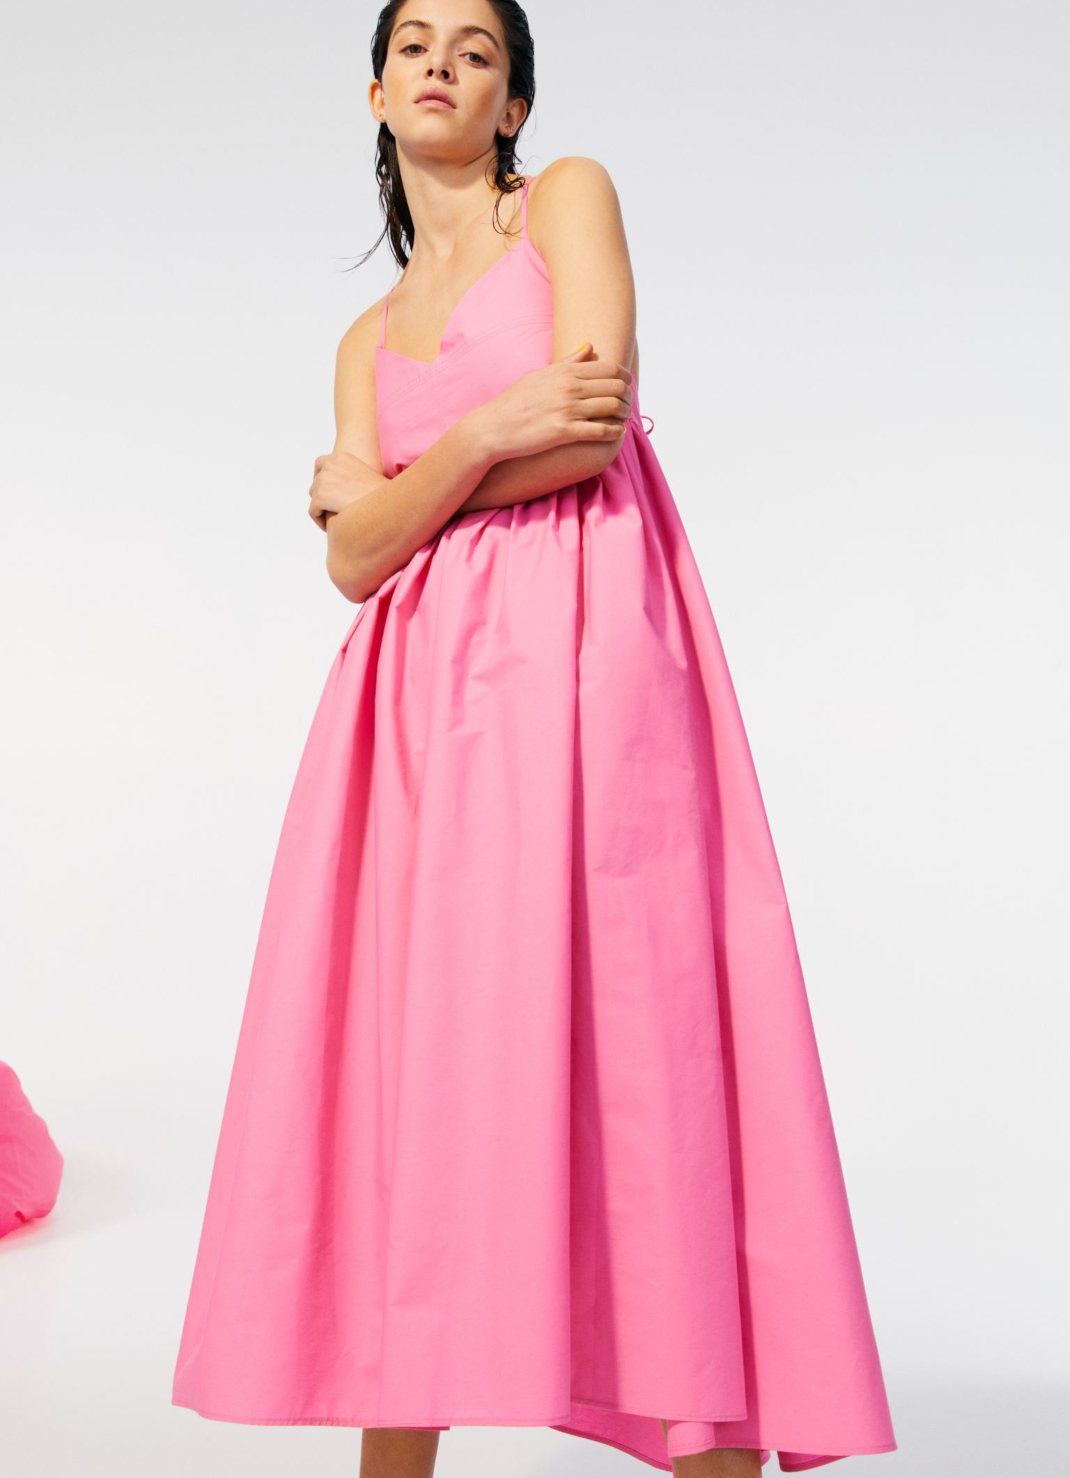 nice to meet you Festival relax Τρία φορέματα από τα H&M στις ωραιότερες αποχρώσεις του καλοκαιρινού ροζ |  BOVARY